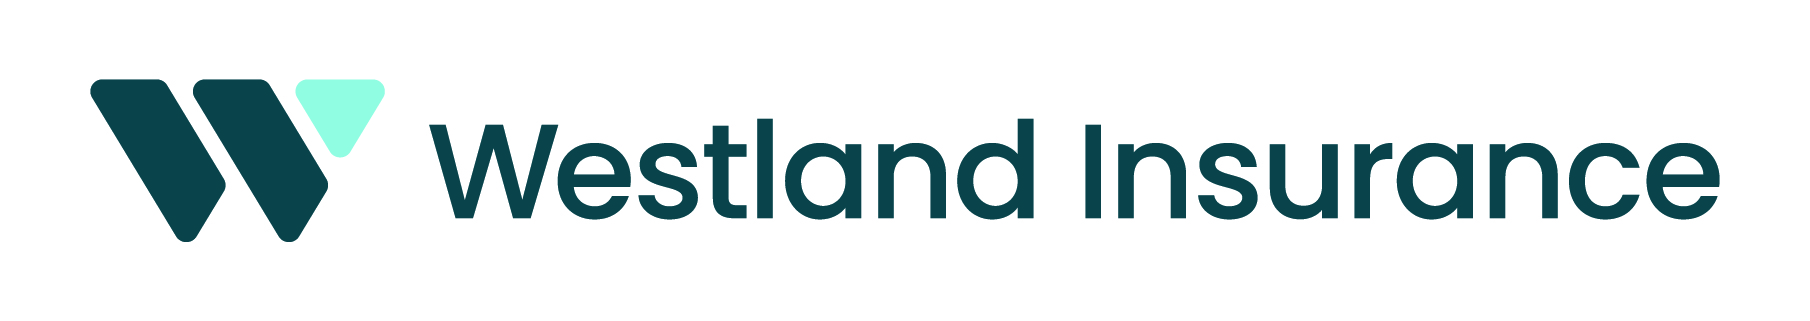 Westland Insurance launches Private Client Services practice to serve affluent Canadians